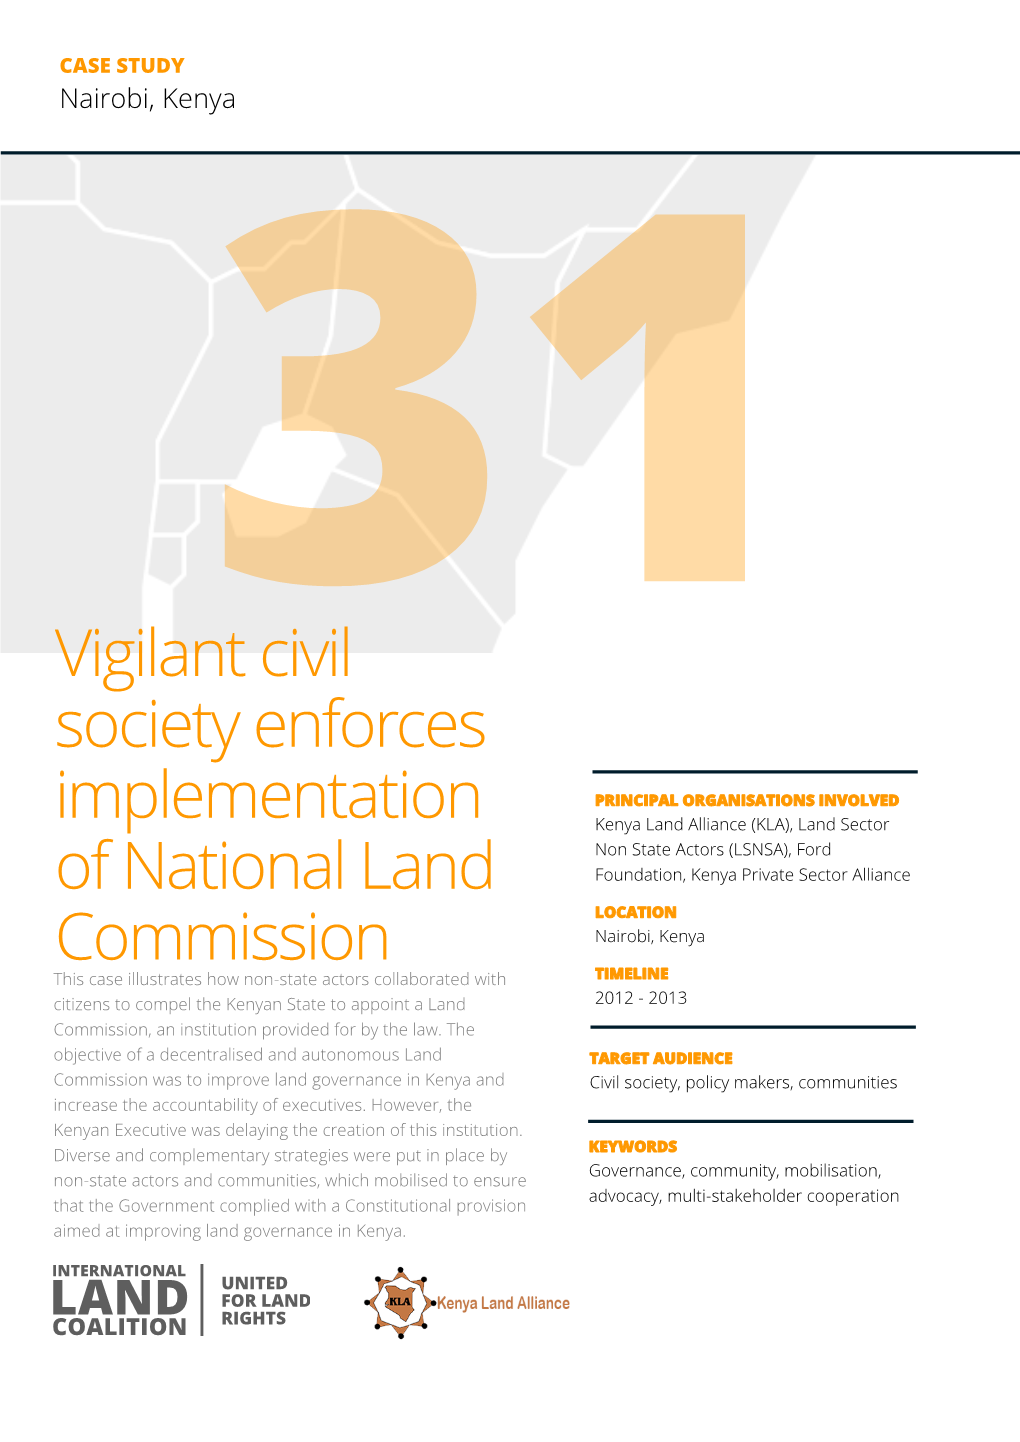 Vigilant Civil Society Enforces Implementation of National Land Commission